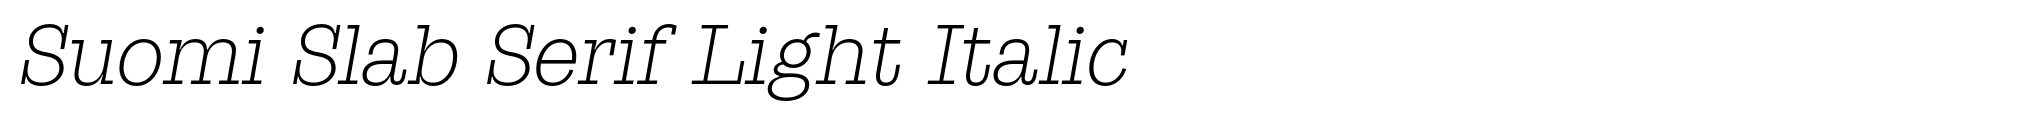 Suomi Slab Serif Light Italic image